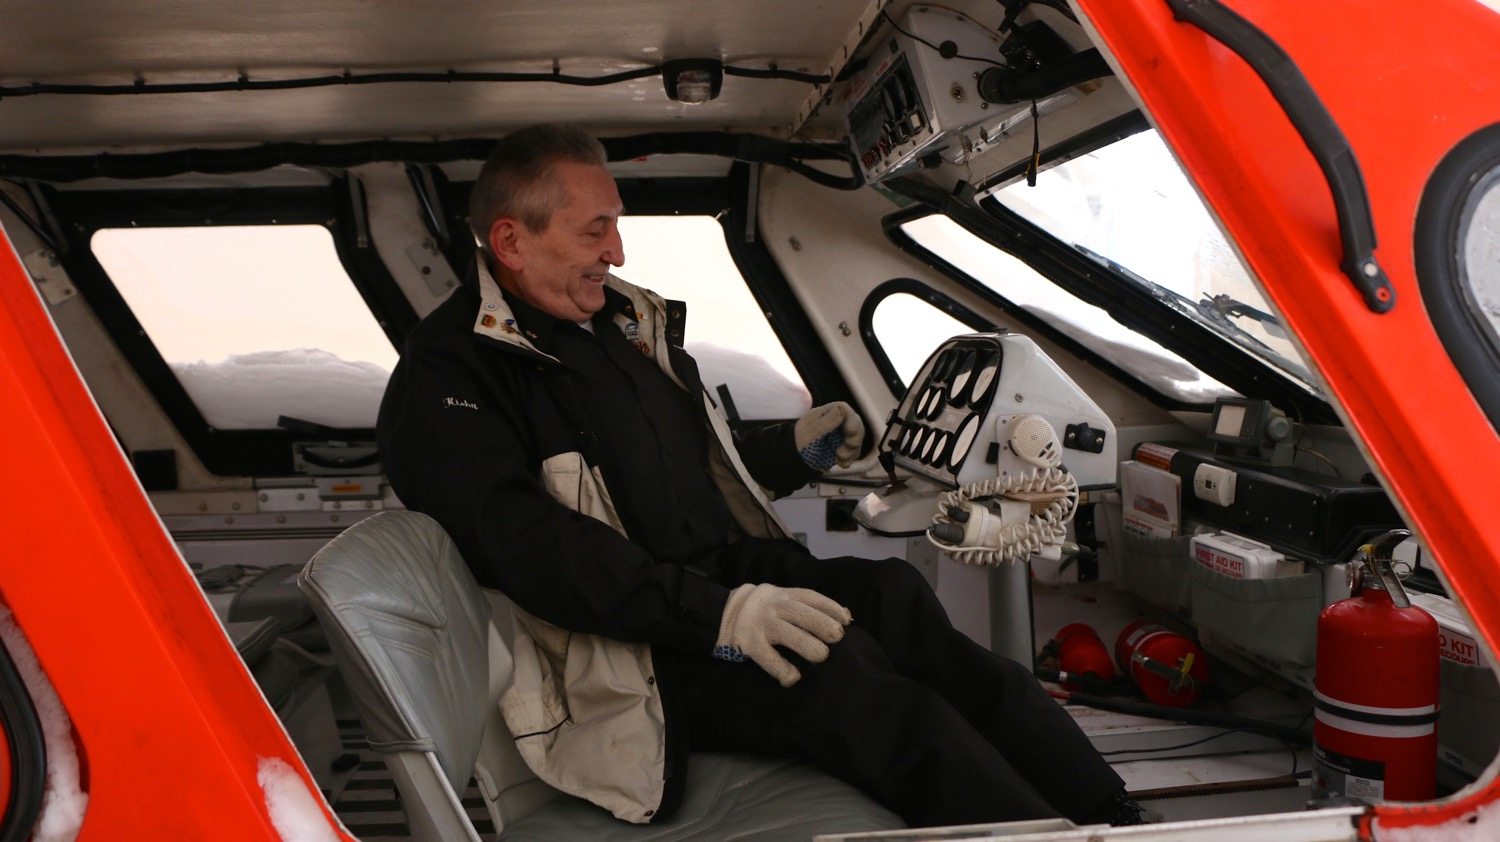 Peter Basko inside hovercraft